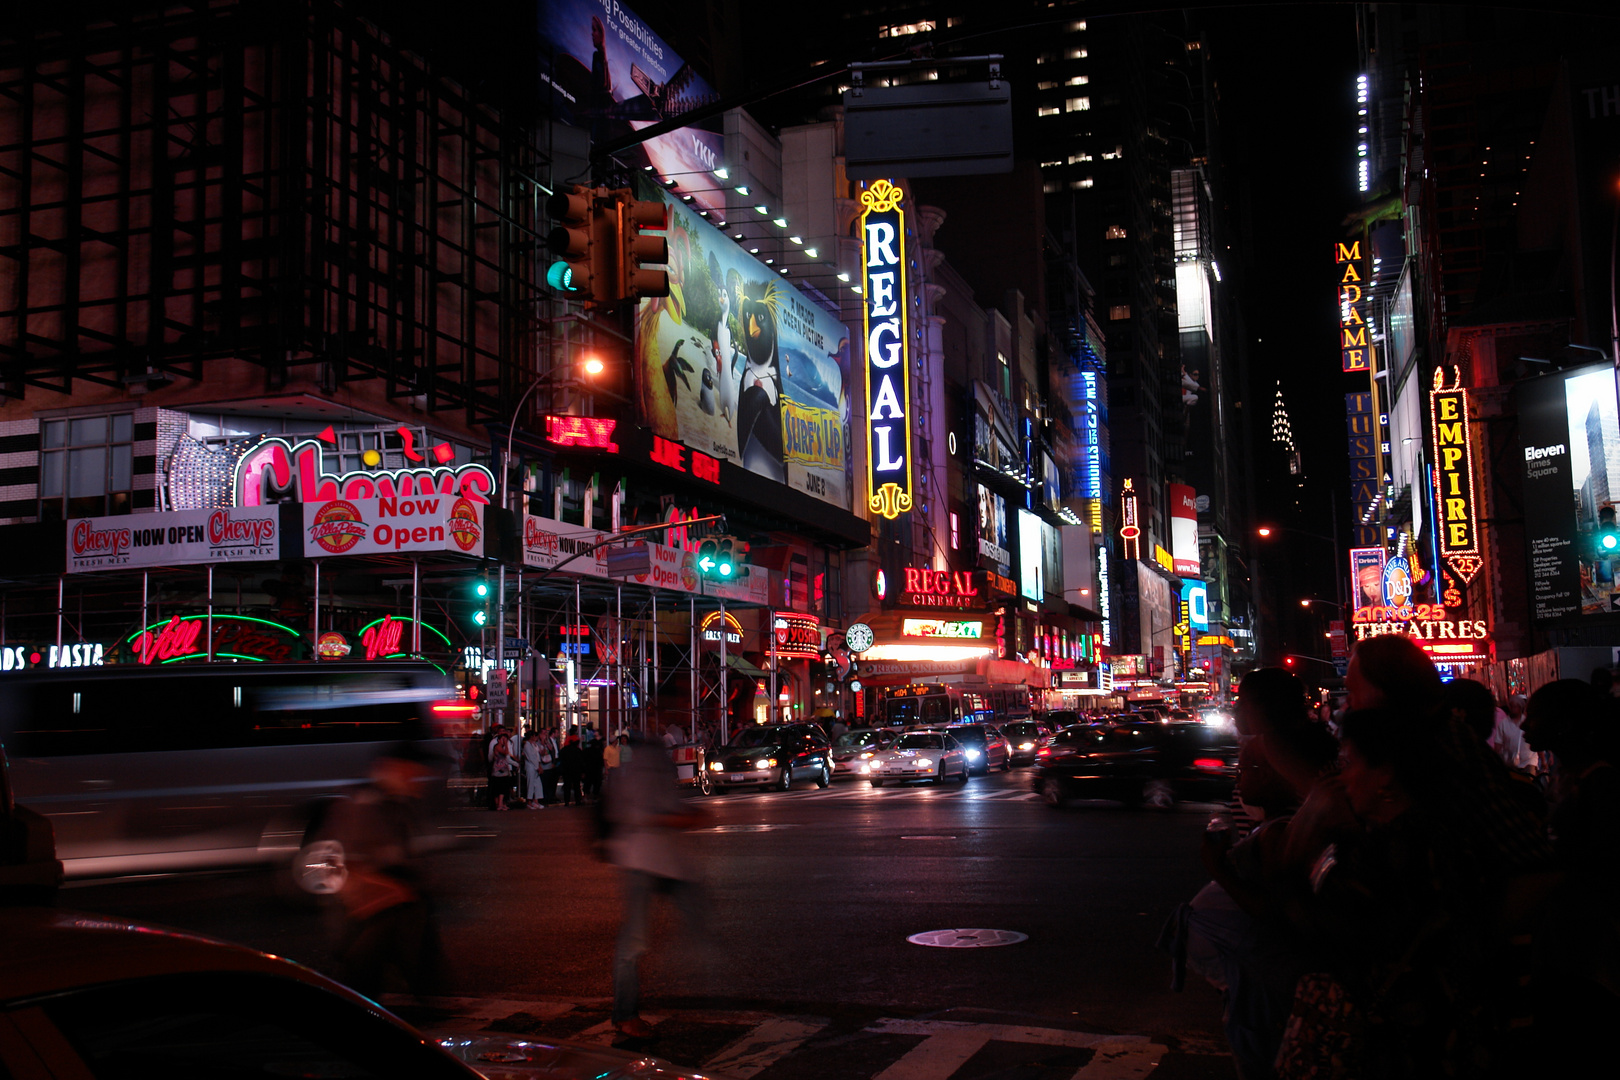 New York Broadway